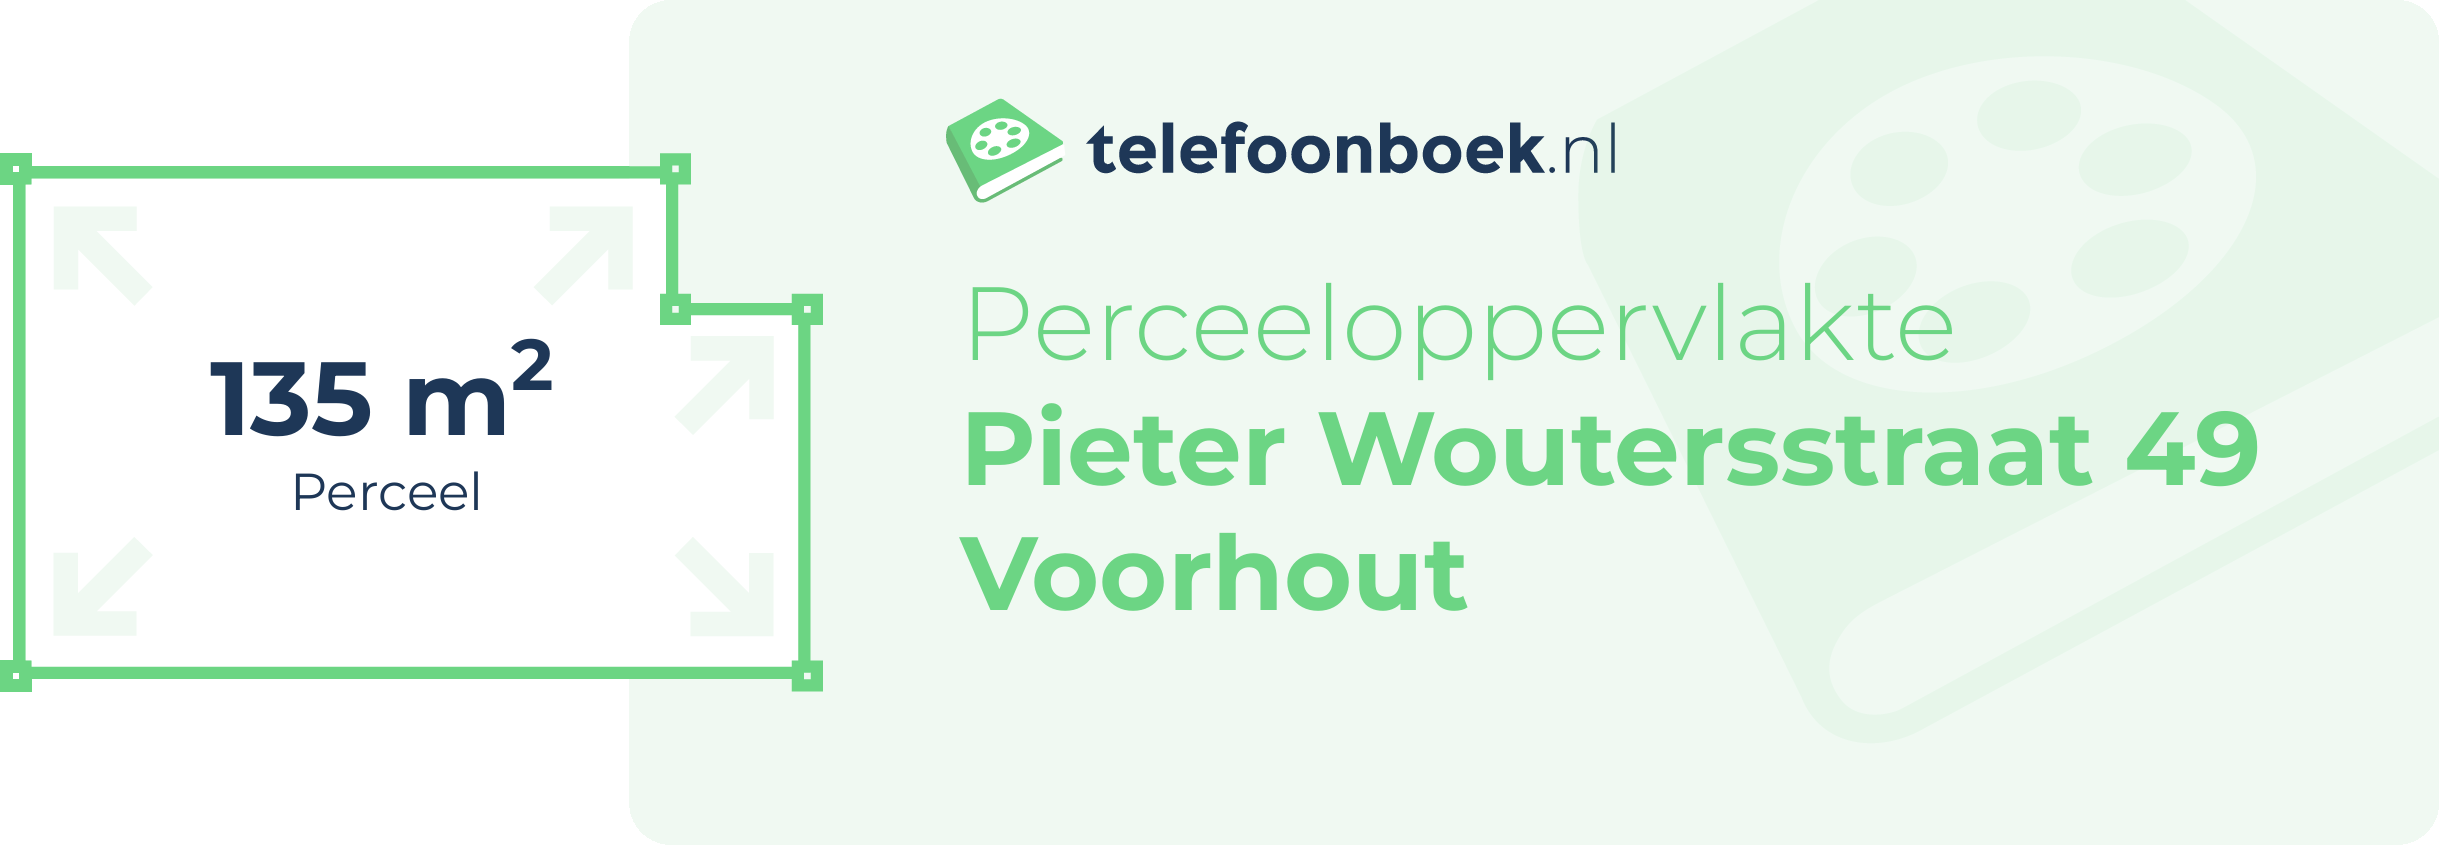 Perceeloppervlakte Pieter Woutersstraat 49 Voorhout